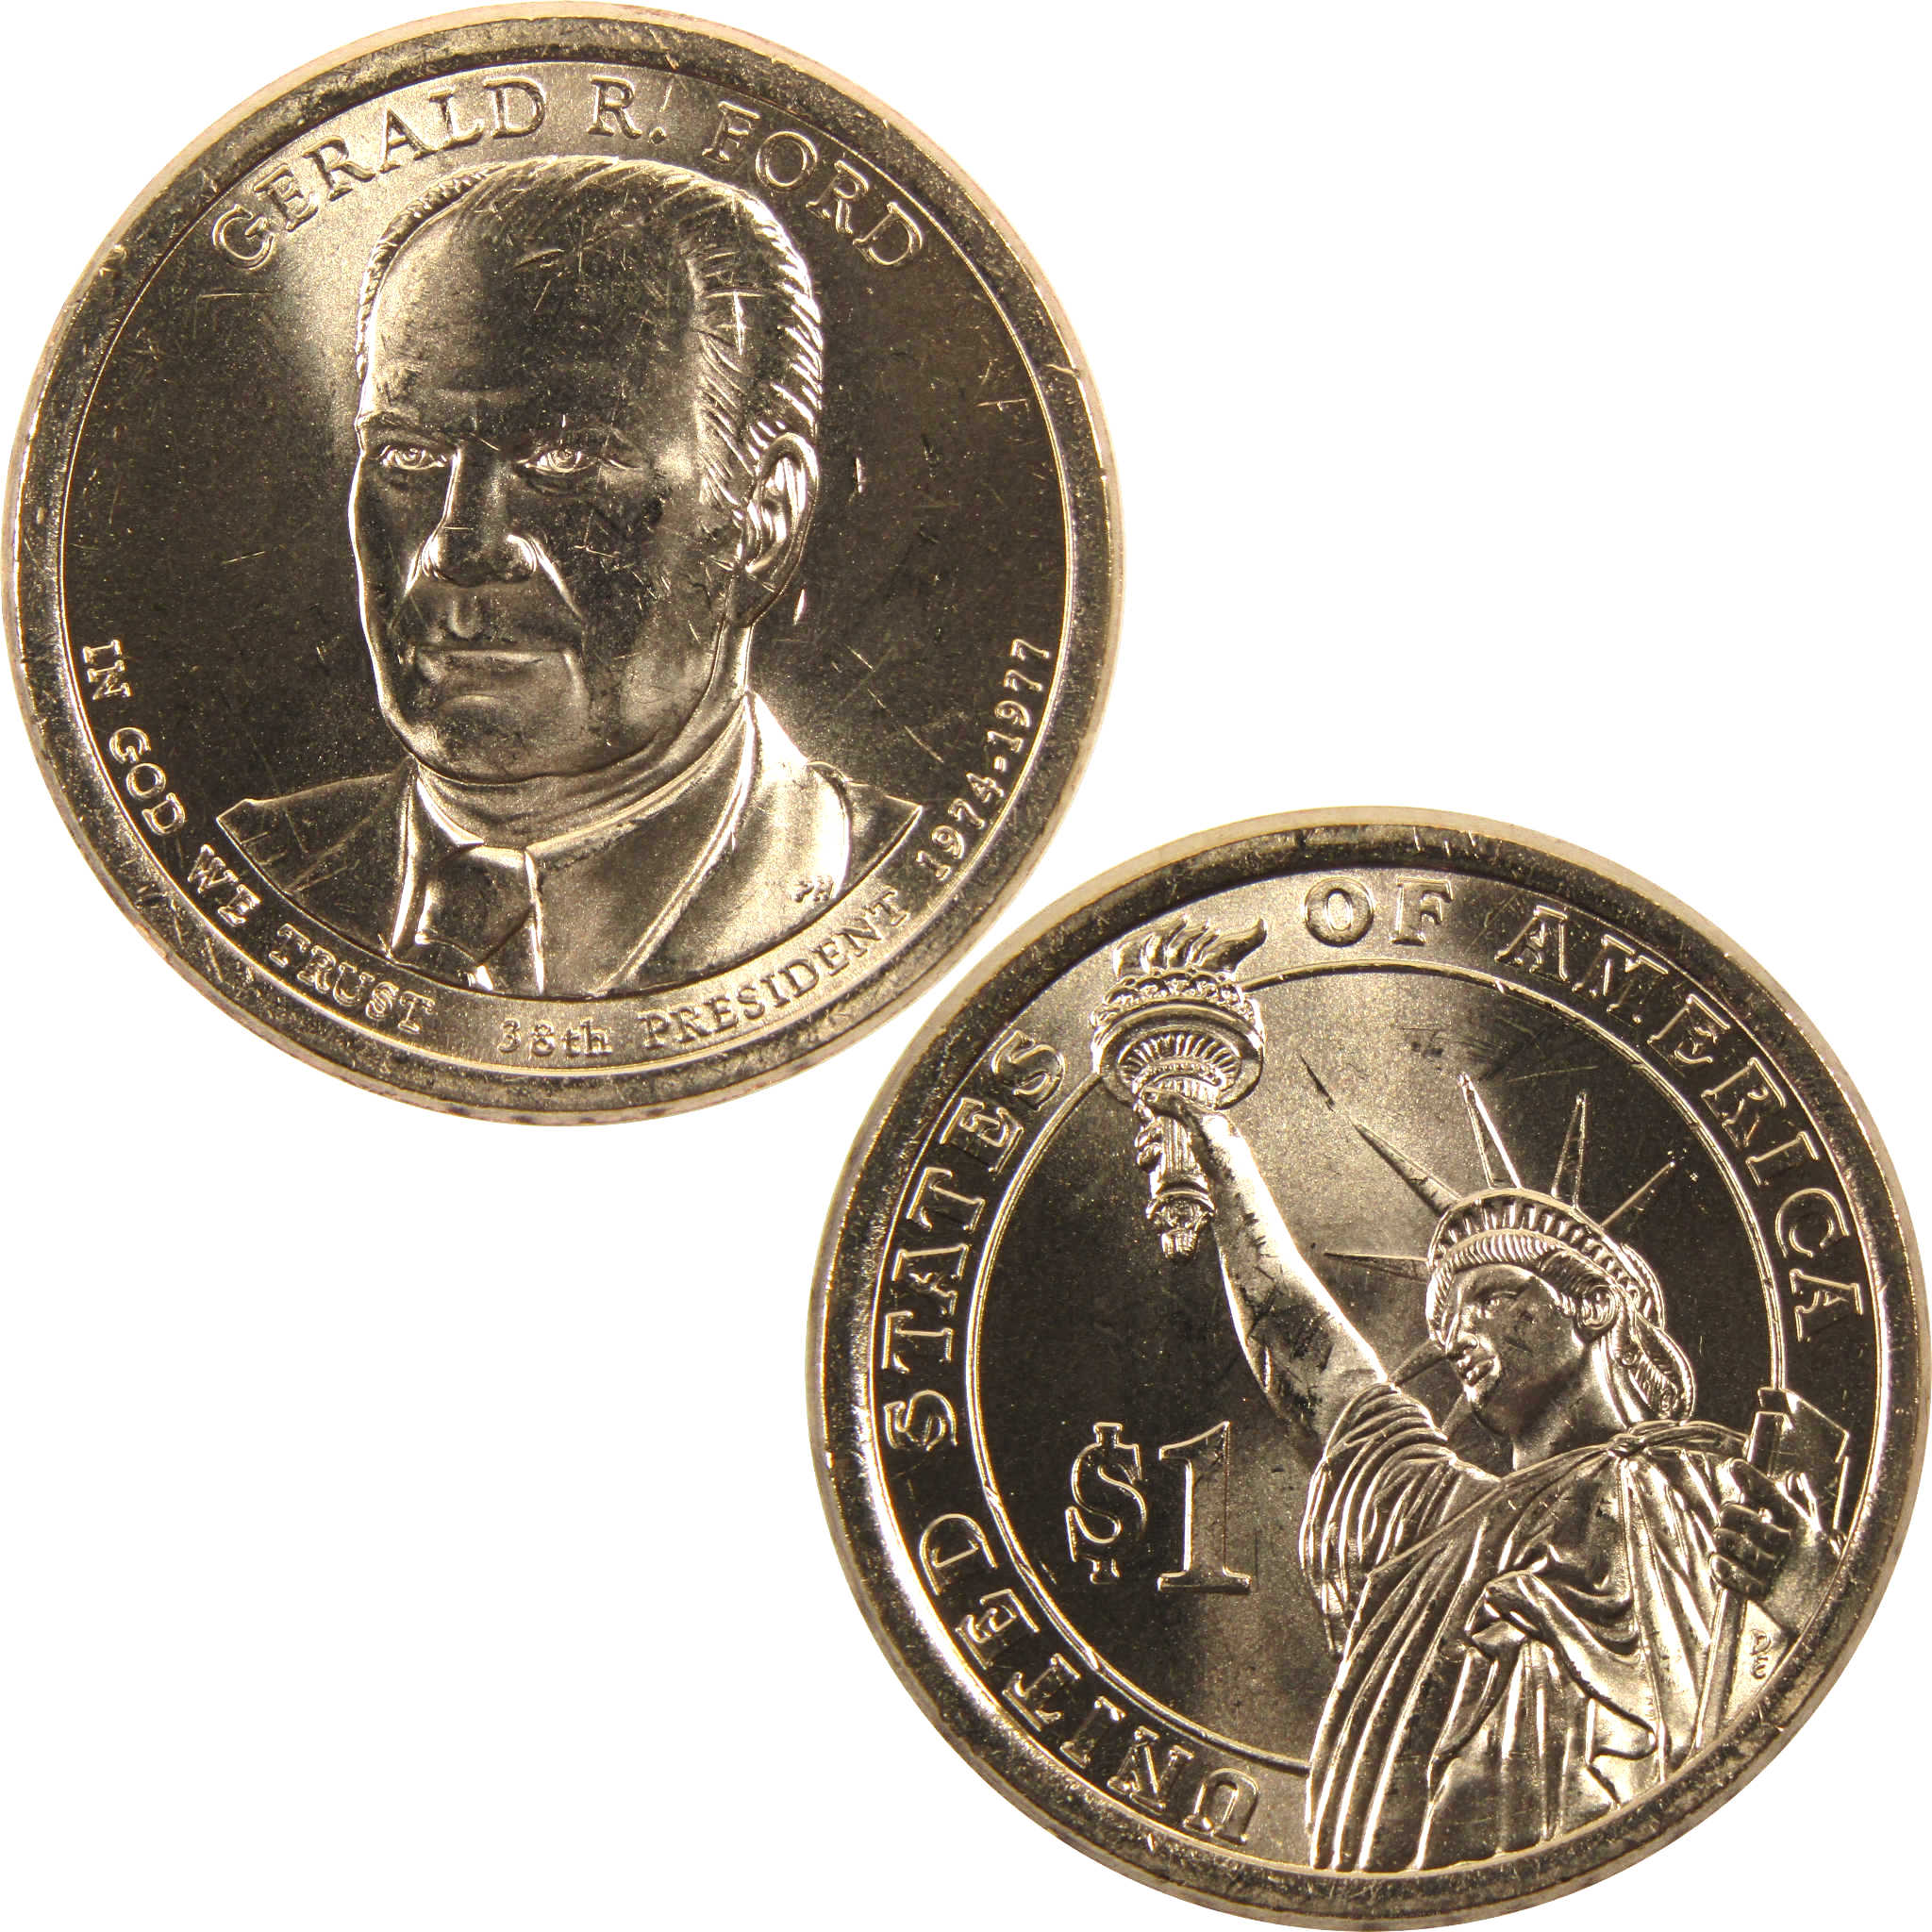 2016 P Gerald R Ford Presidential Dollar BU Uncirculated $1 Coin